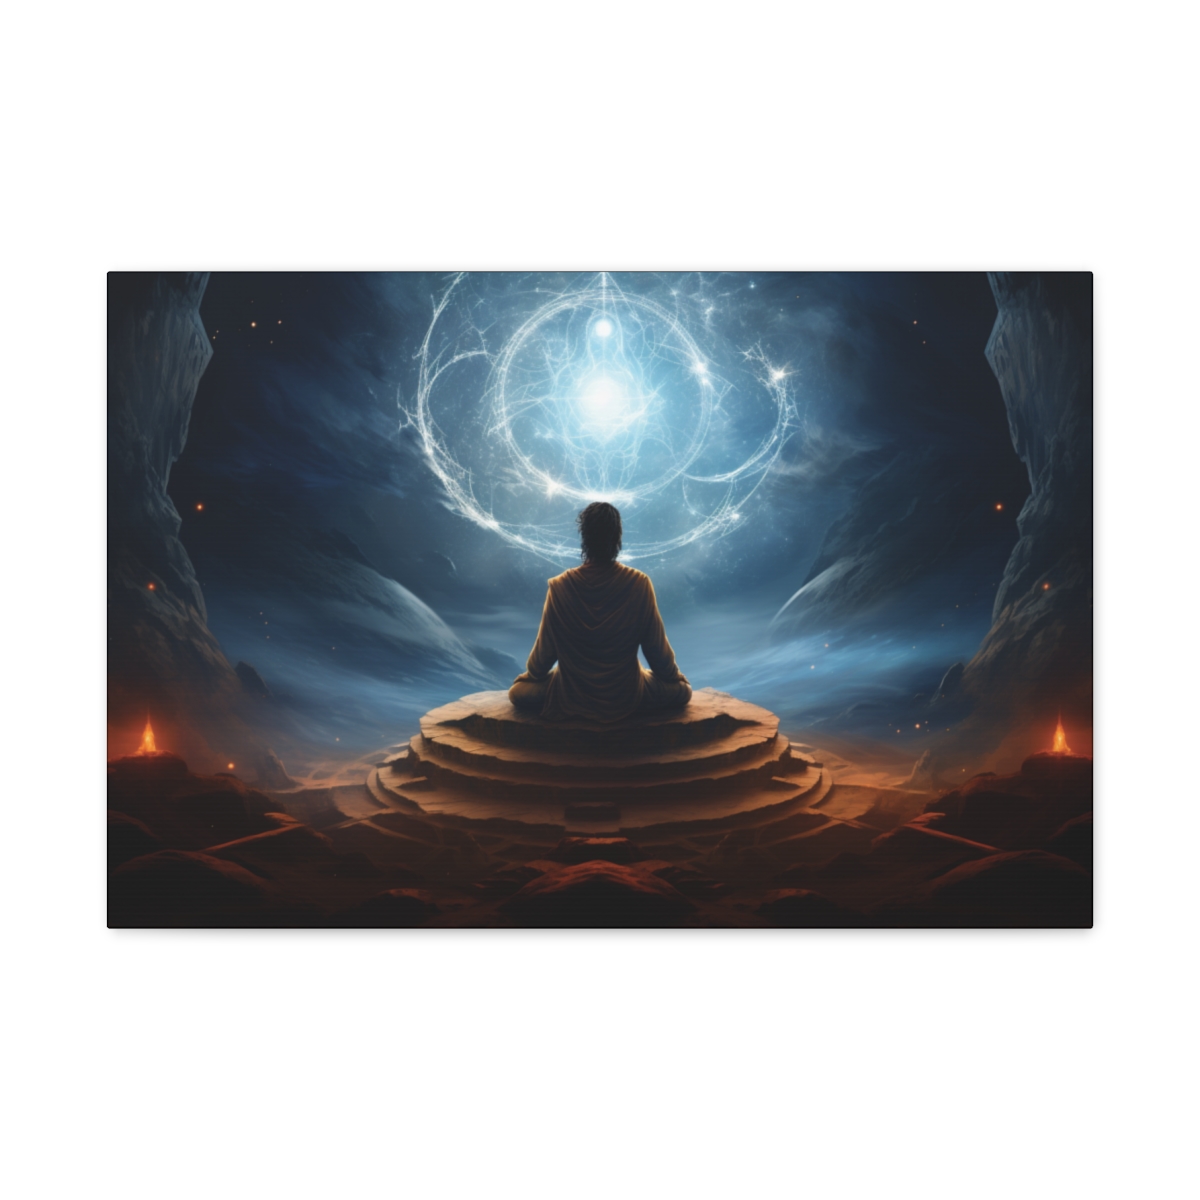 Meditation Art Canvas Print: Seeing The Light